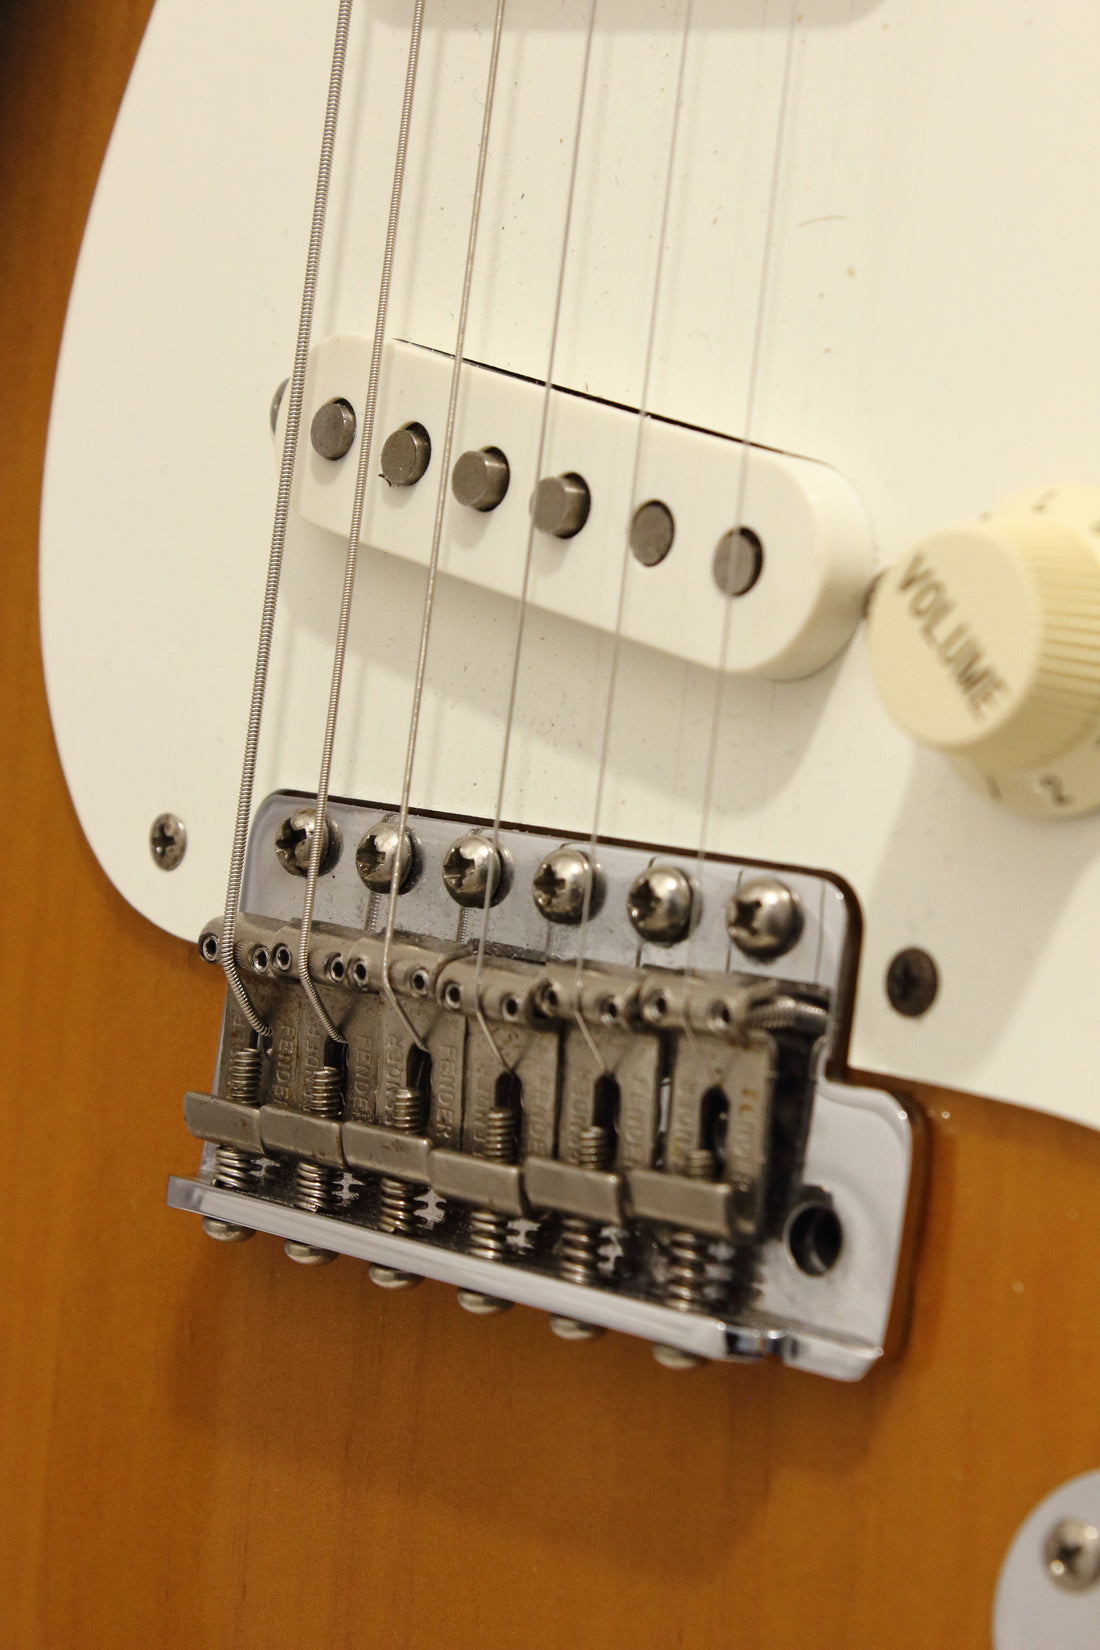 Fender American Vintage '57 Stratocaster Sunburst 1996